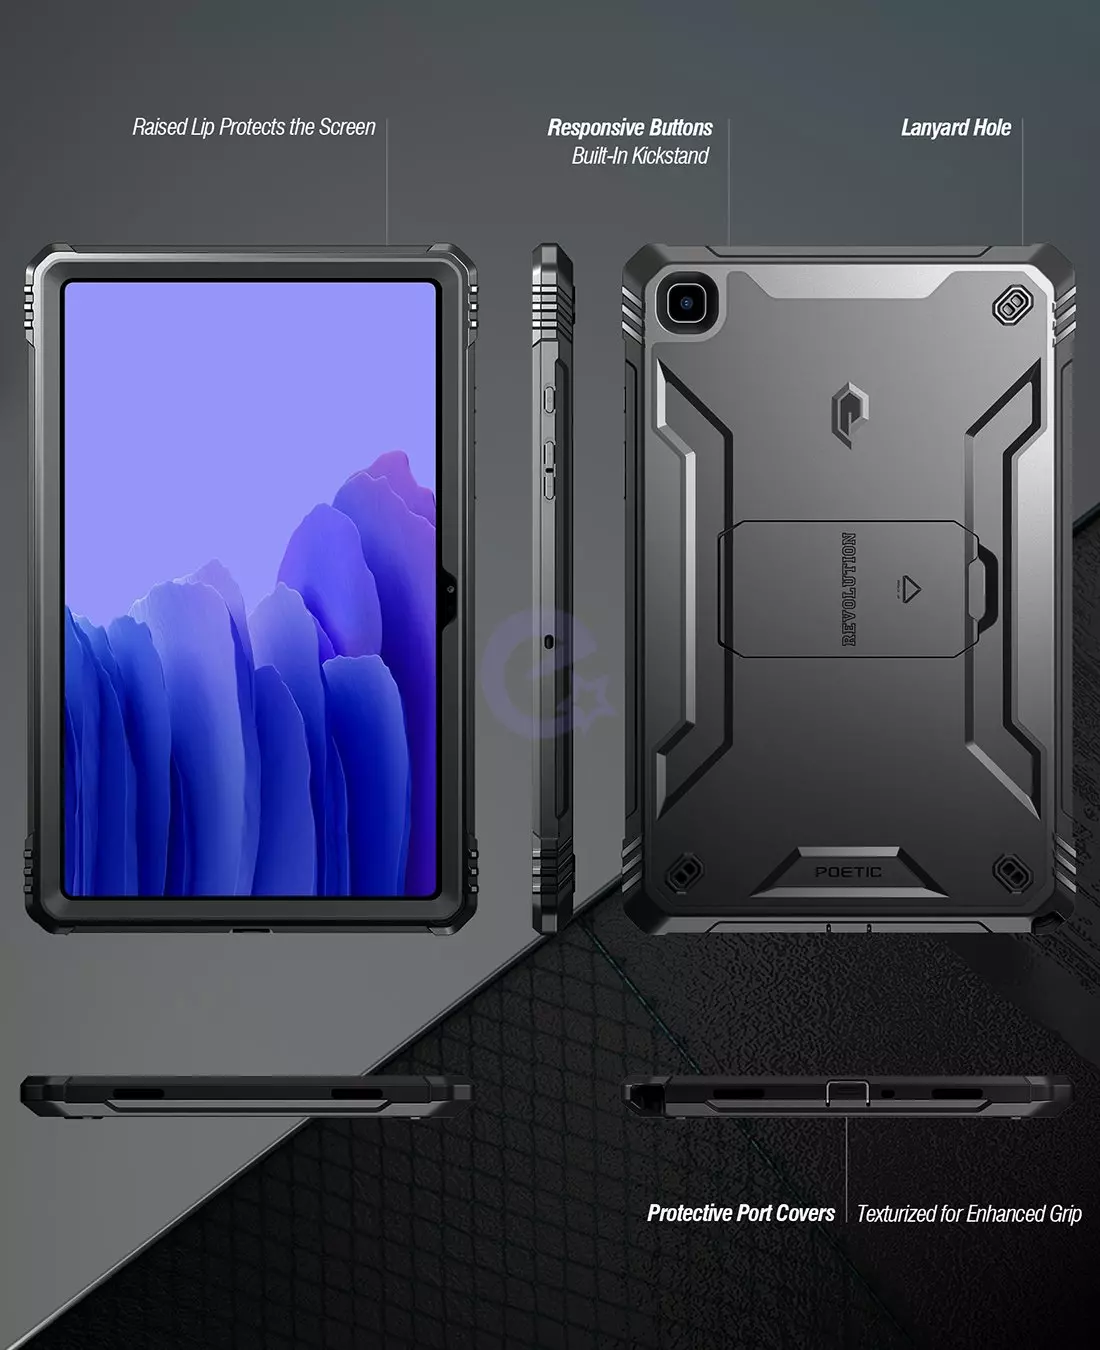 Противоударный чехол Poetic Revolution Hybrid для планшета Samsung Galaxy Tab A7 10.4" SM-T500 T505 2020 Black